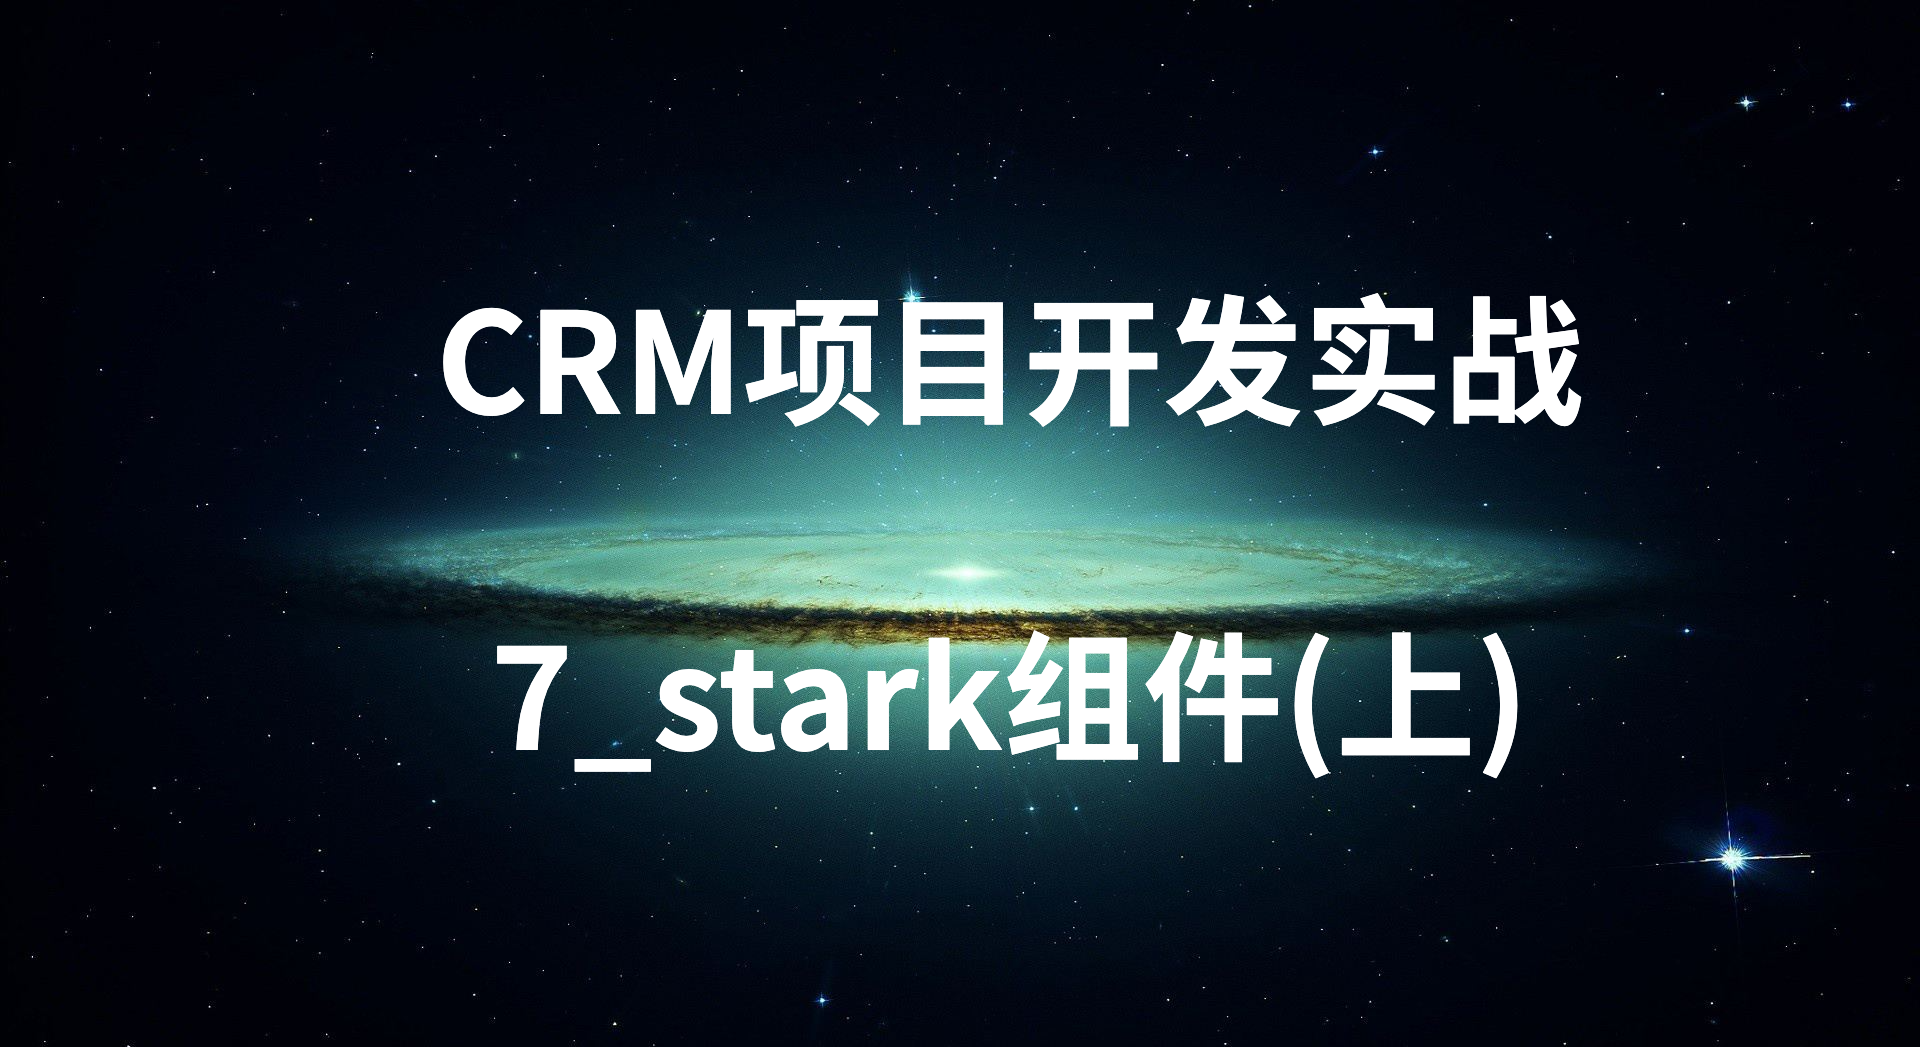 CRM项目开发实战-7_stark组件(上)